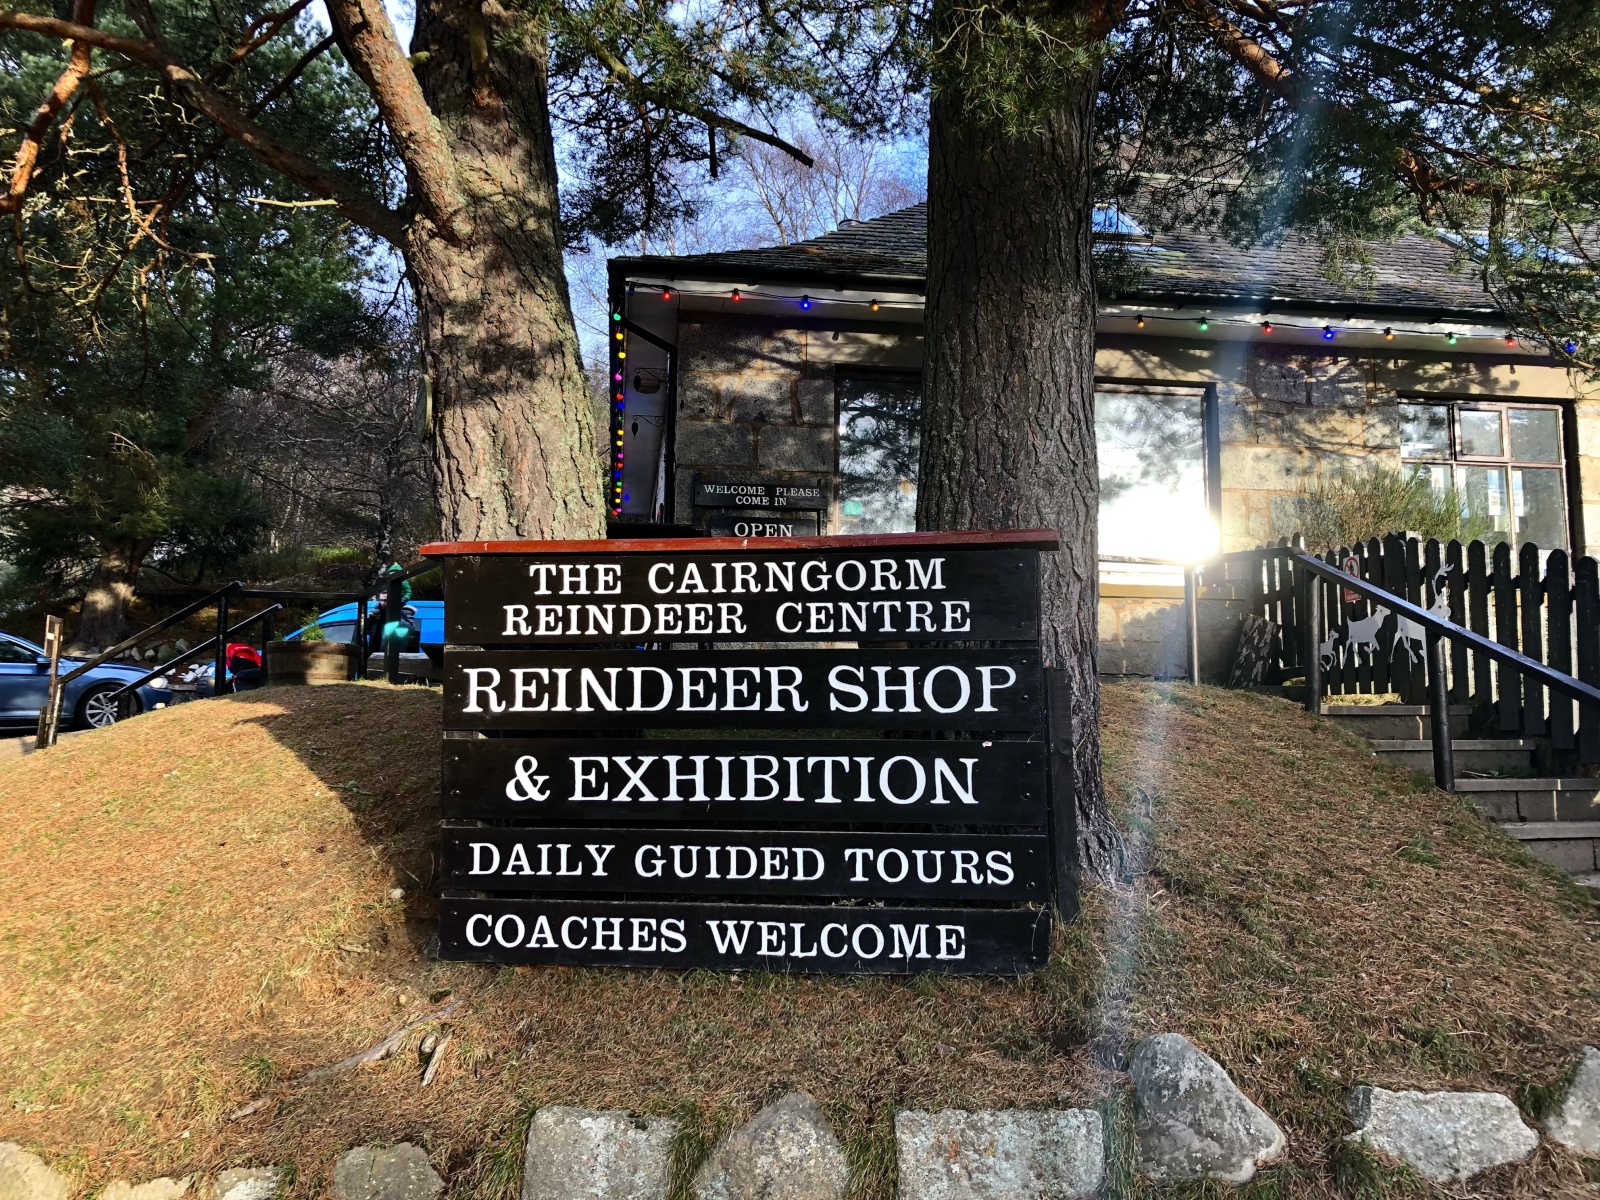 The Cairngorm Reindeer Centre